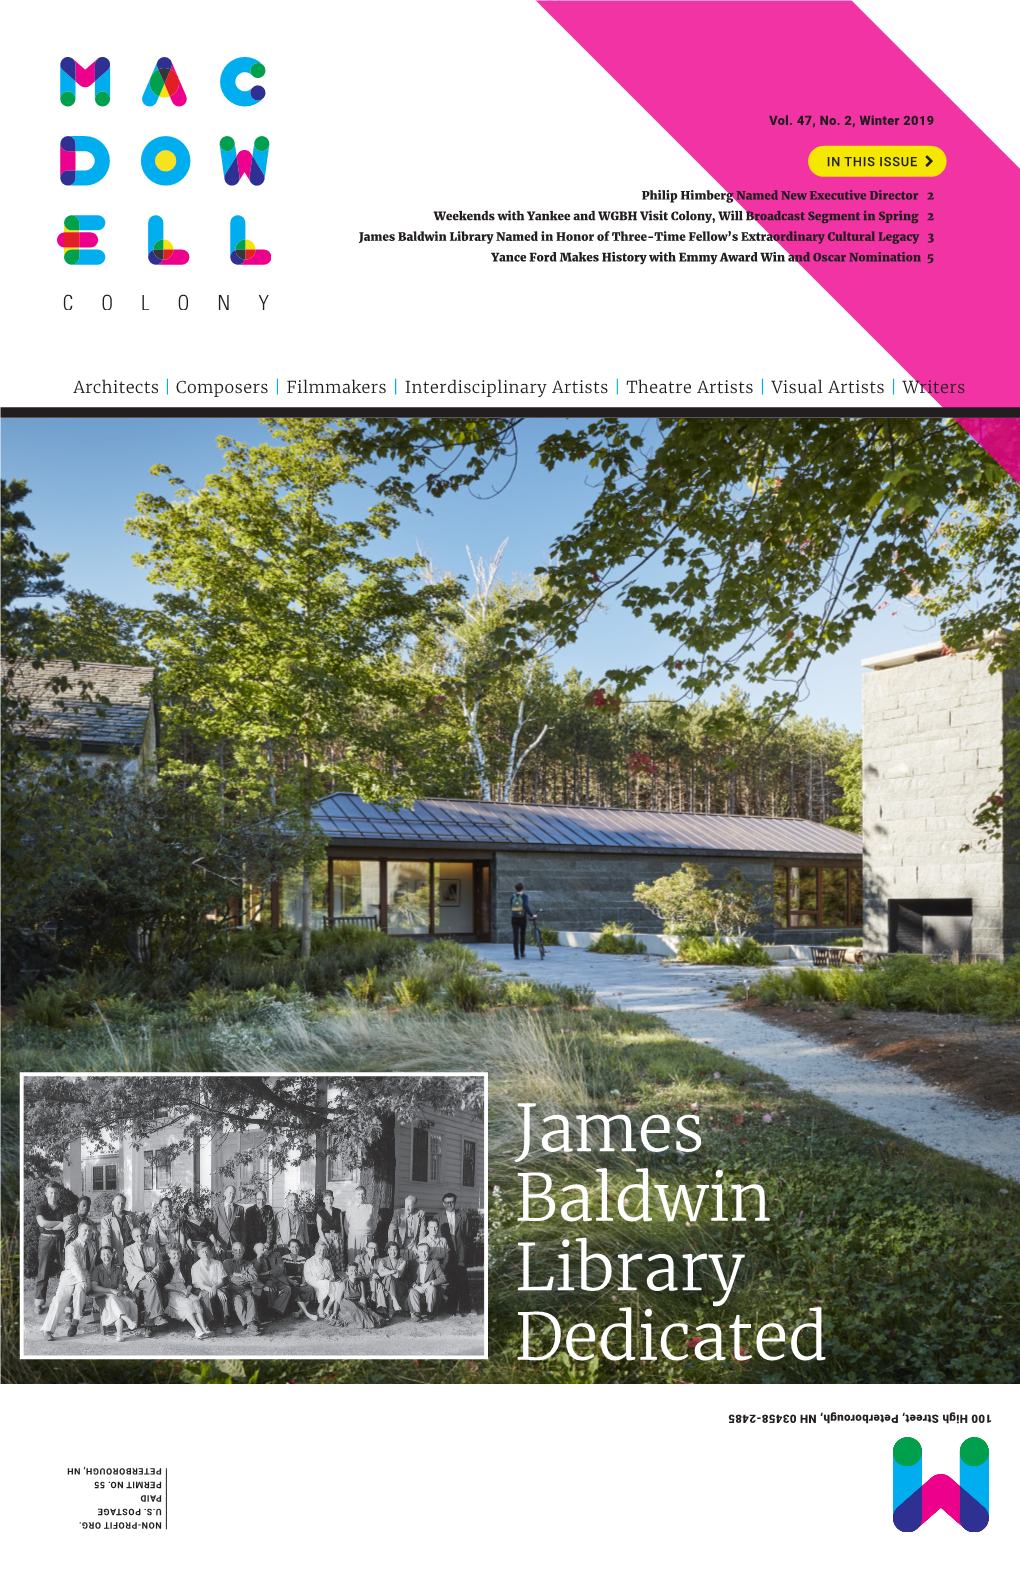 James Baldwin Library Dedicated